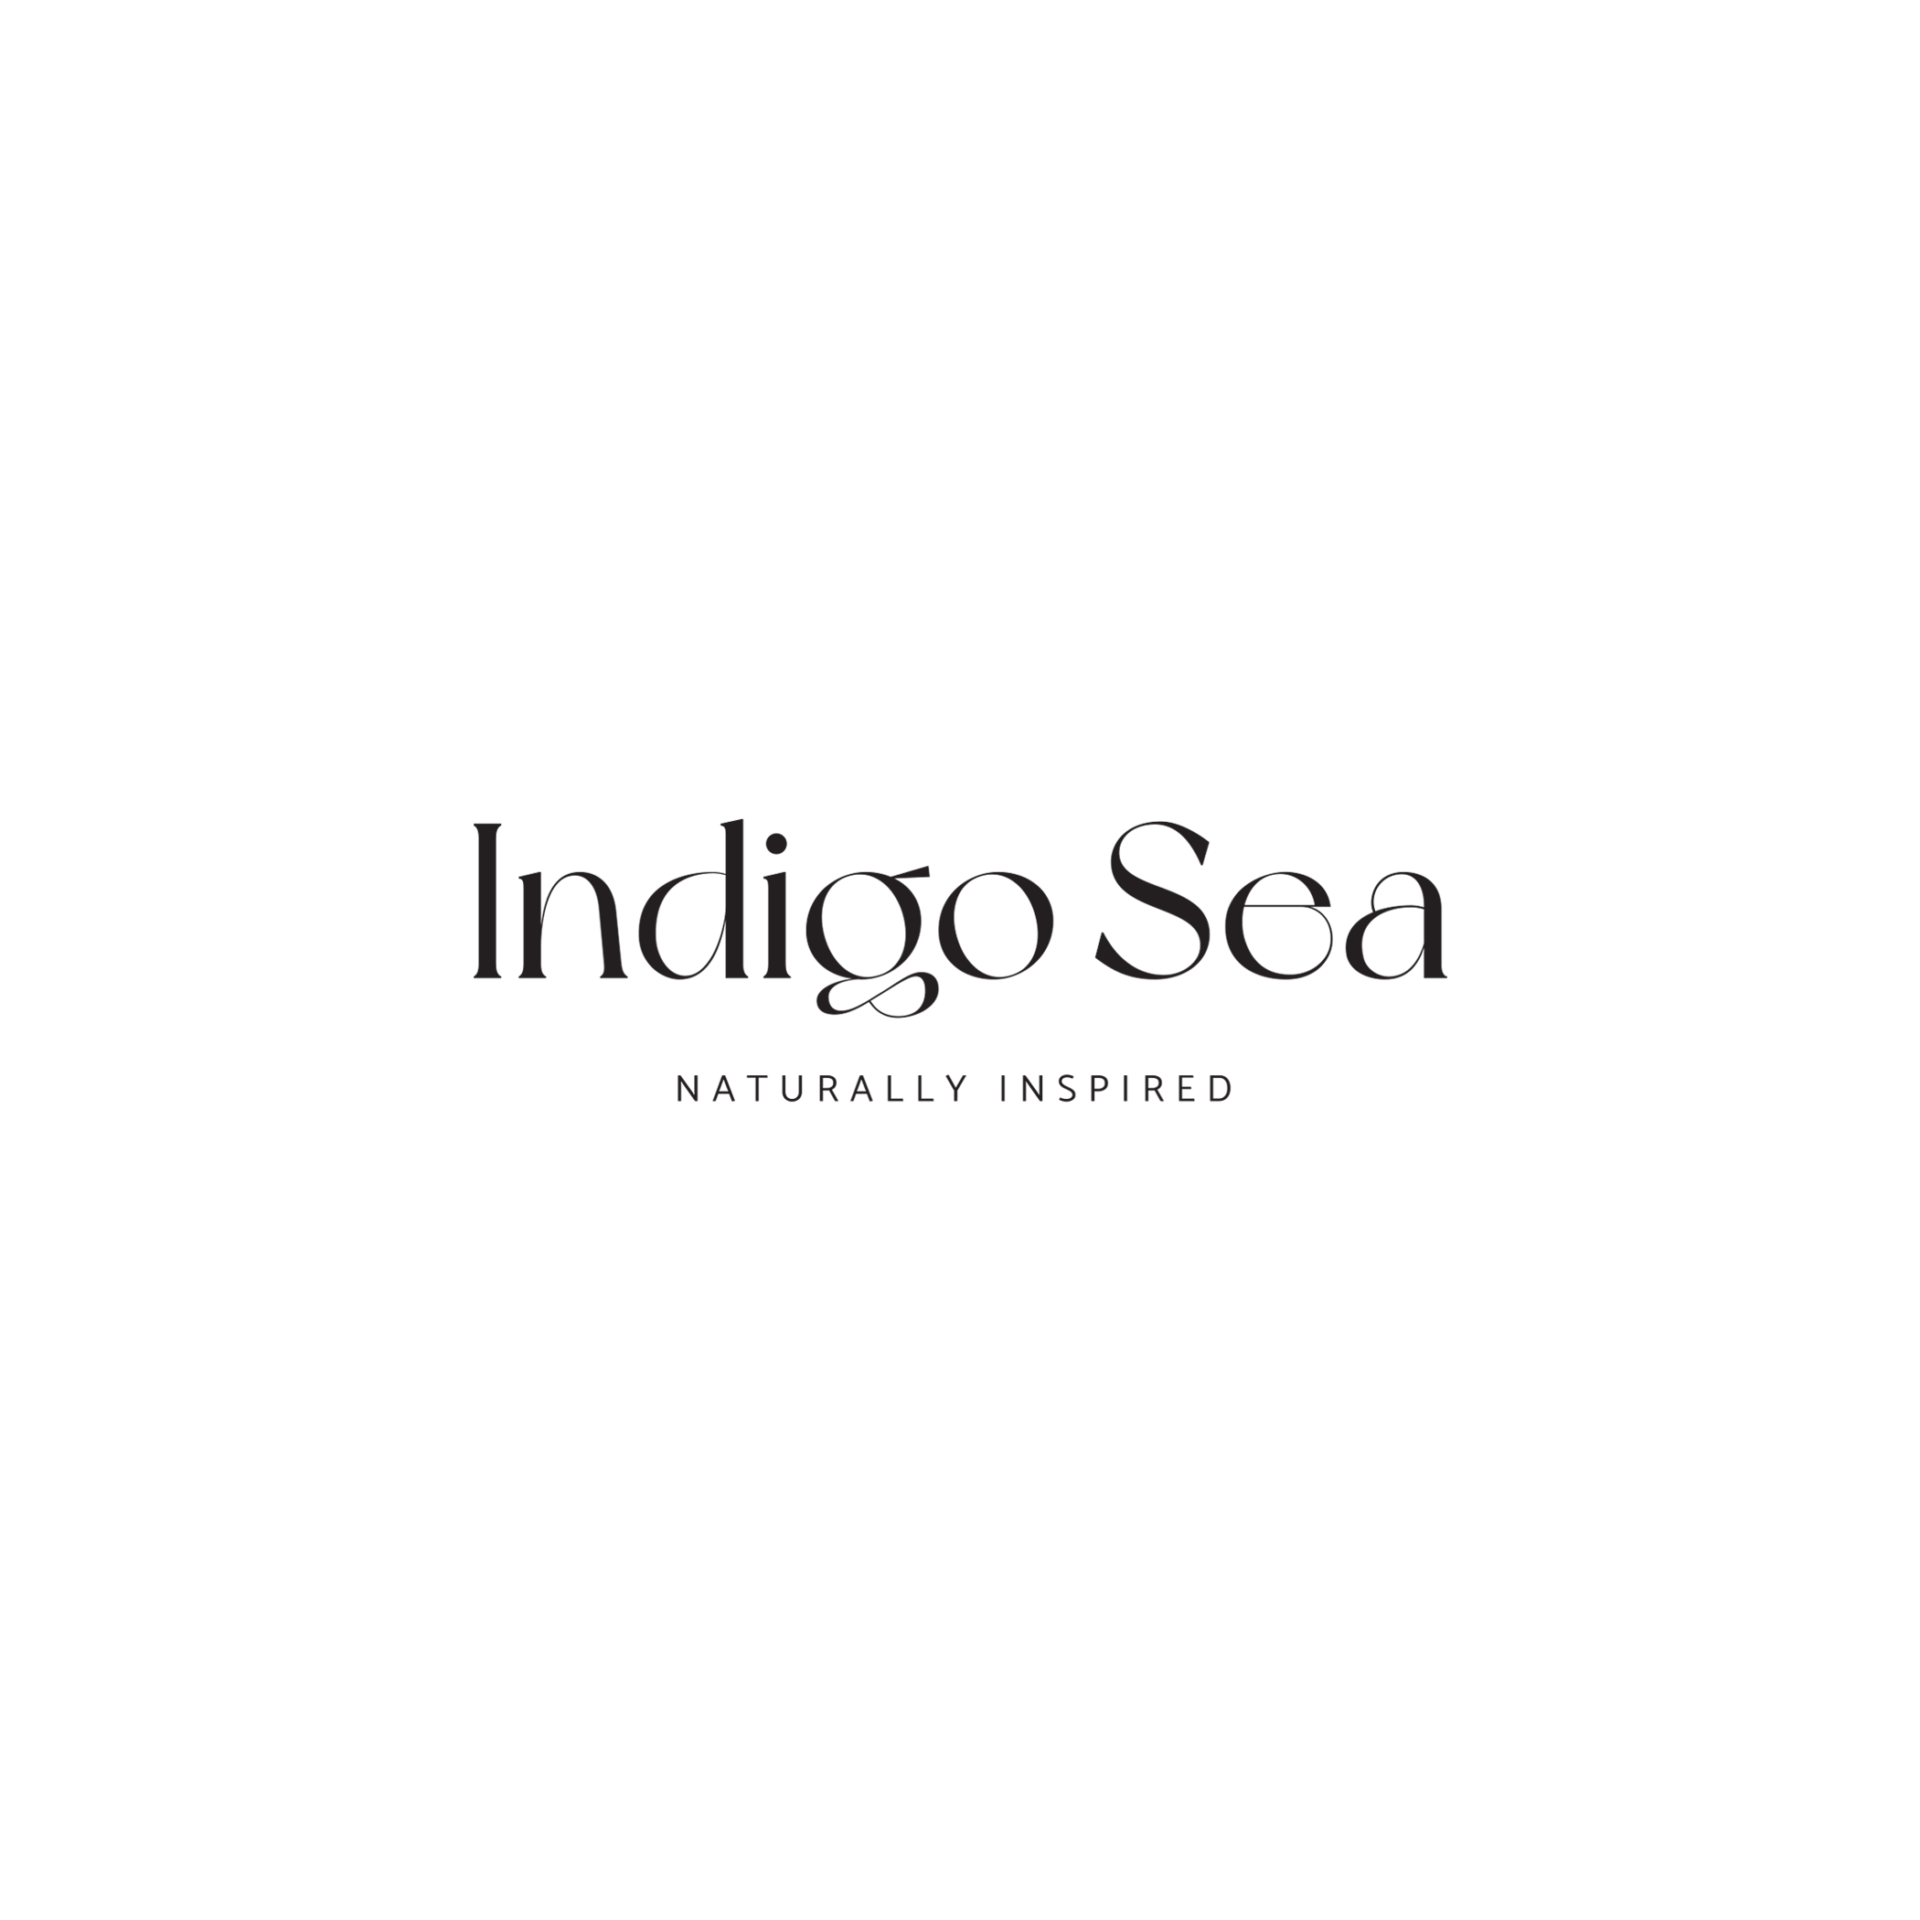 Indigo Sea Logo Black